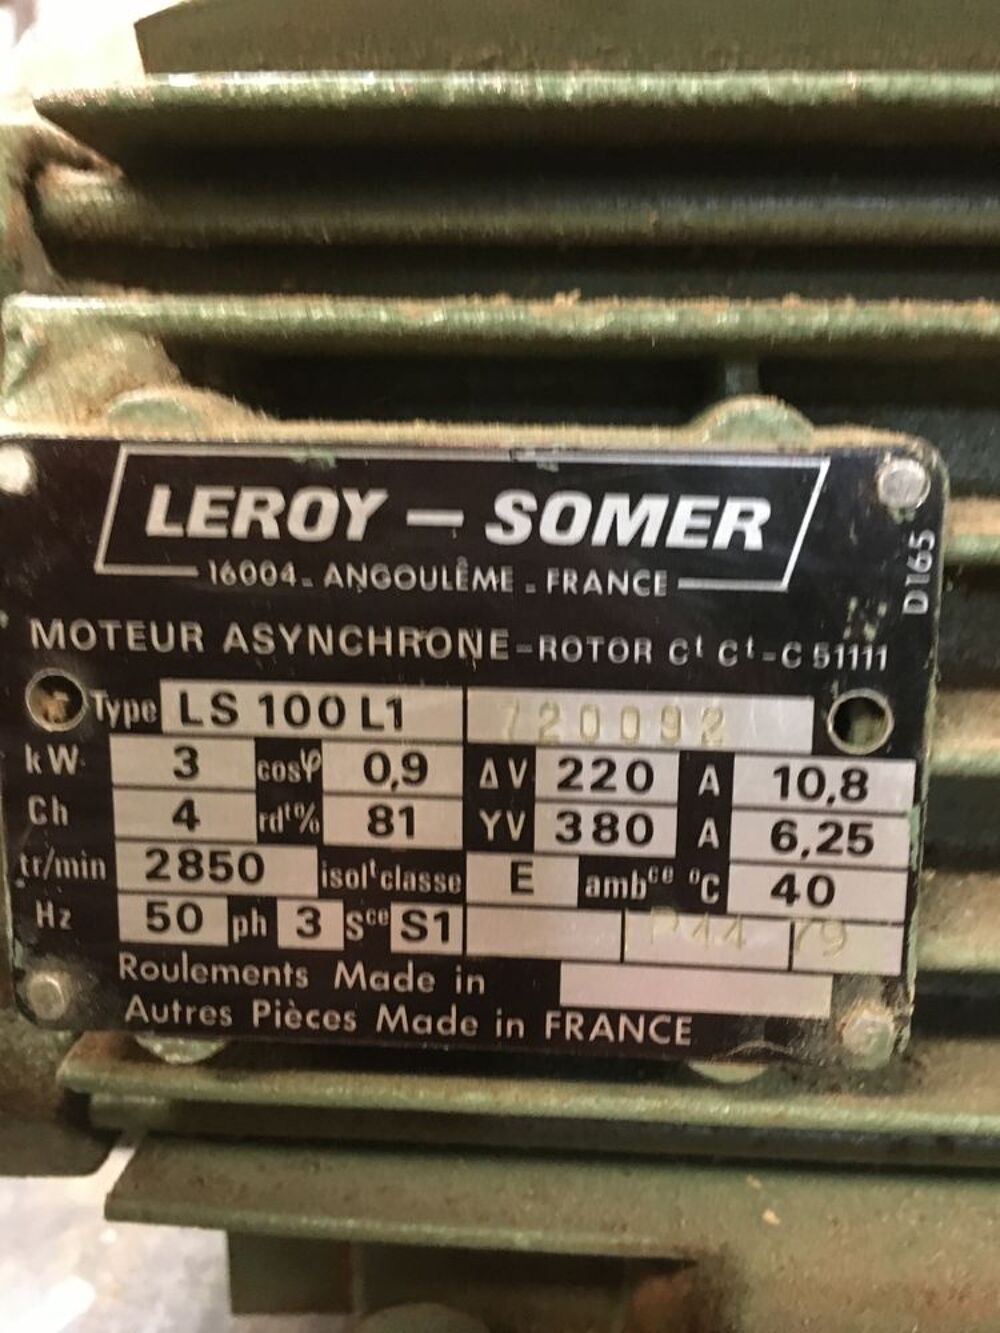 Moteur Leroy Somer 4 kw, 
Bricolage